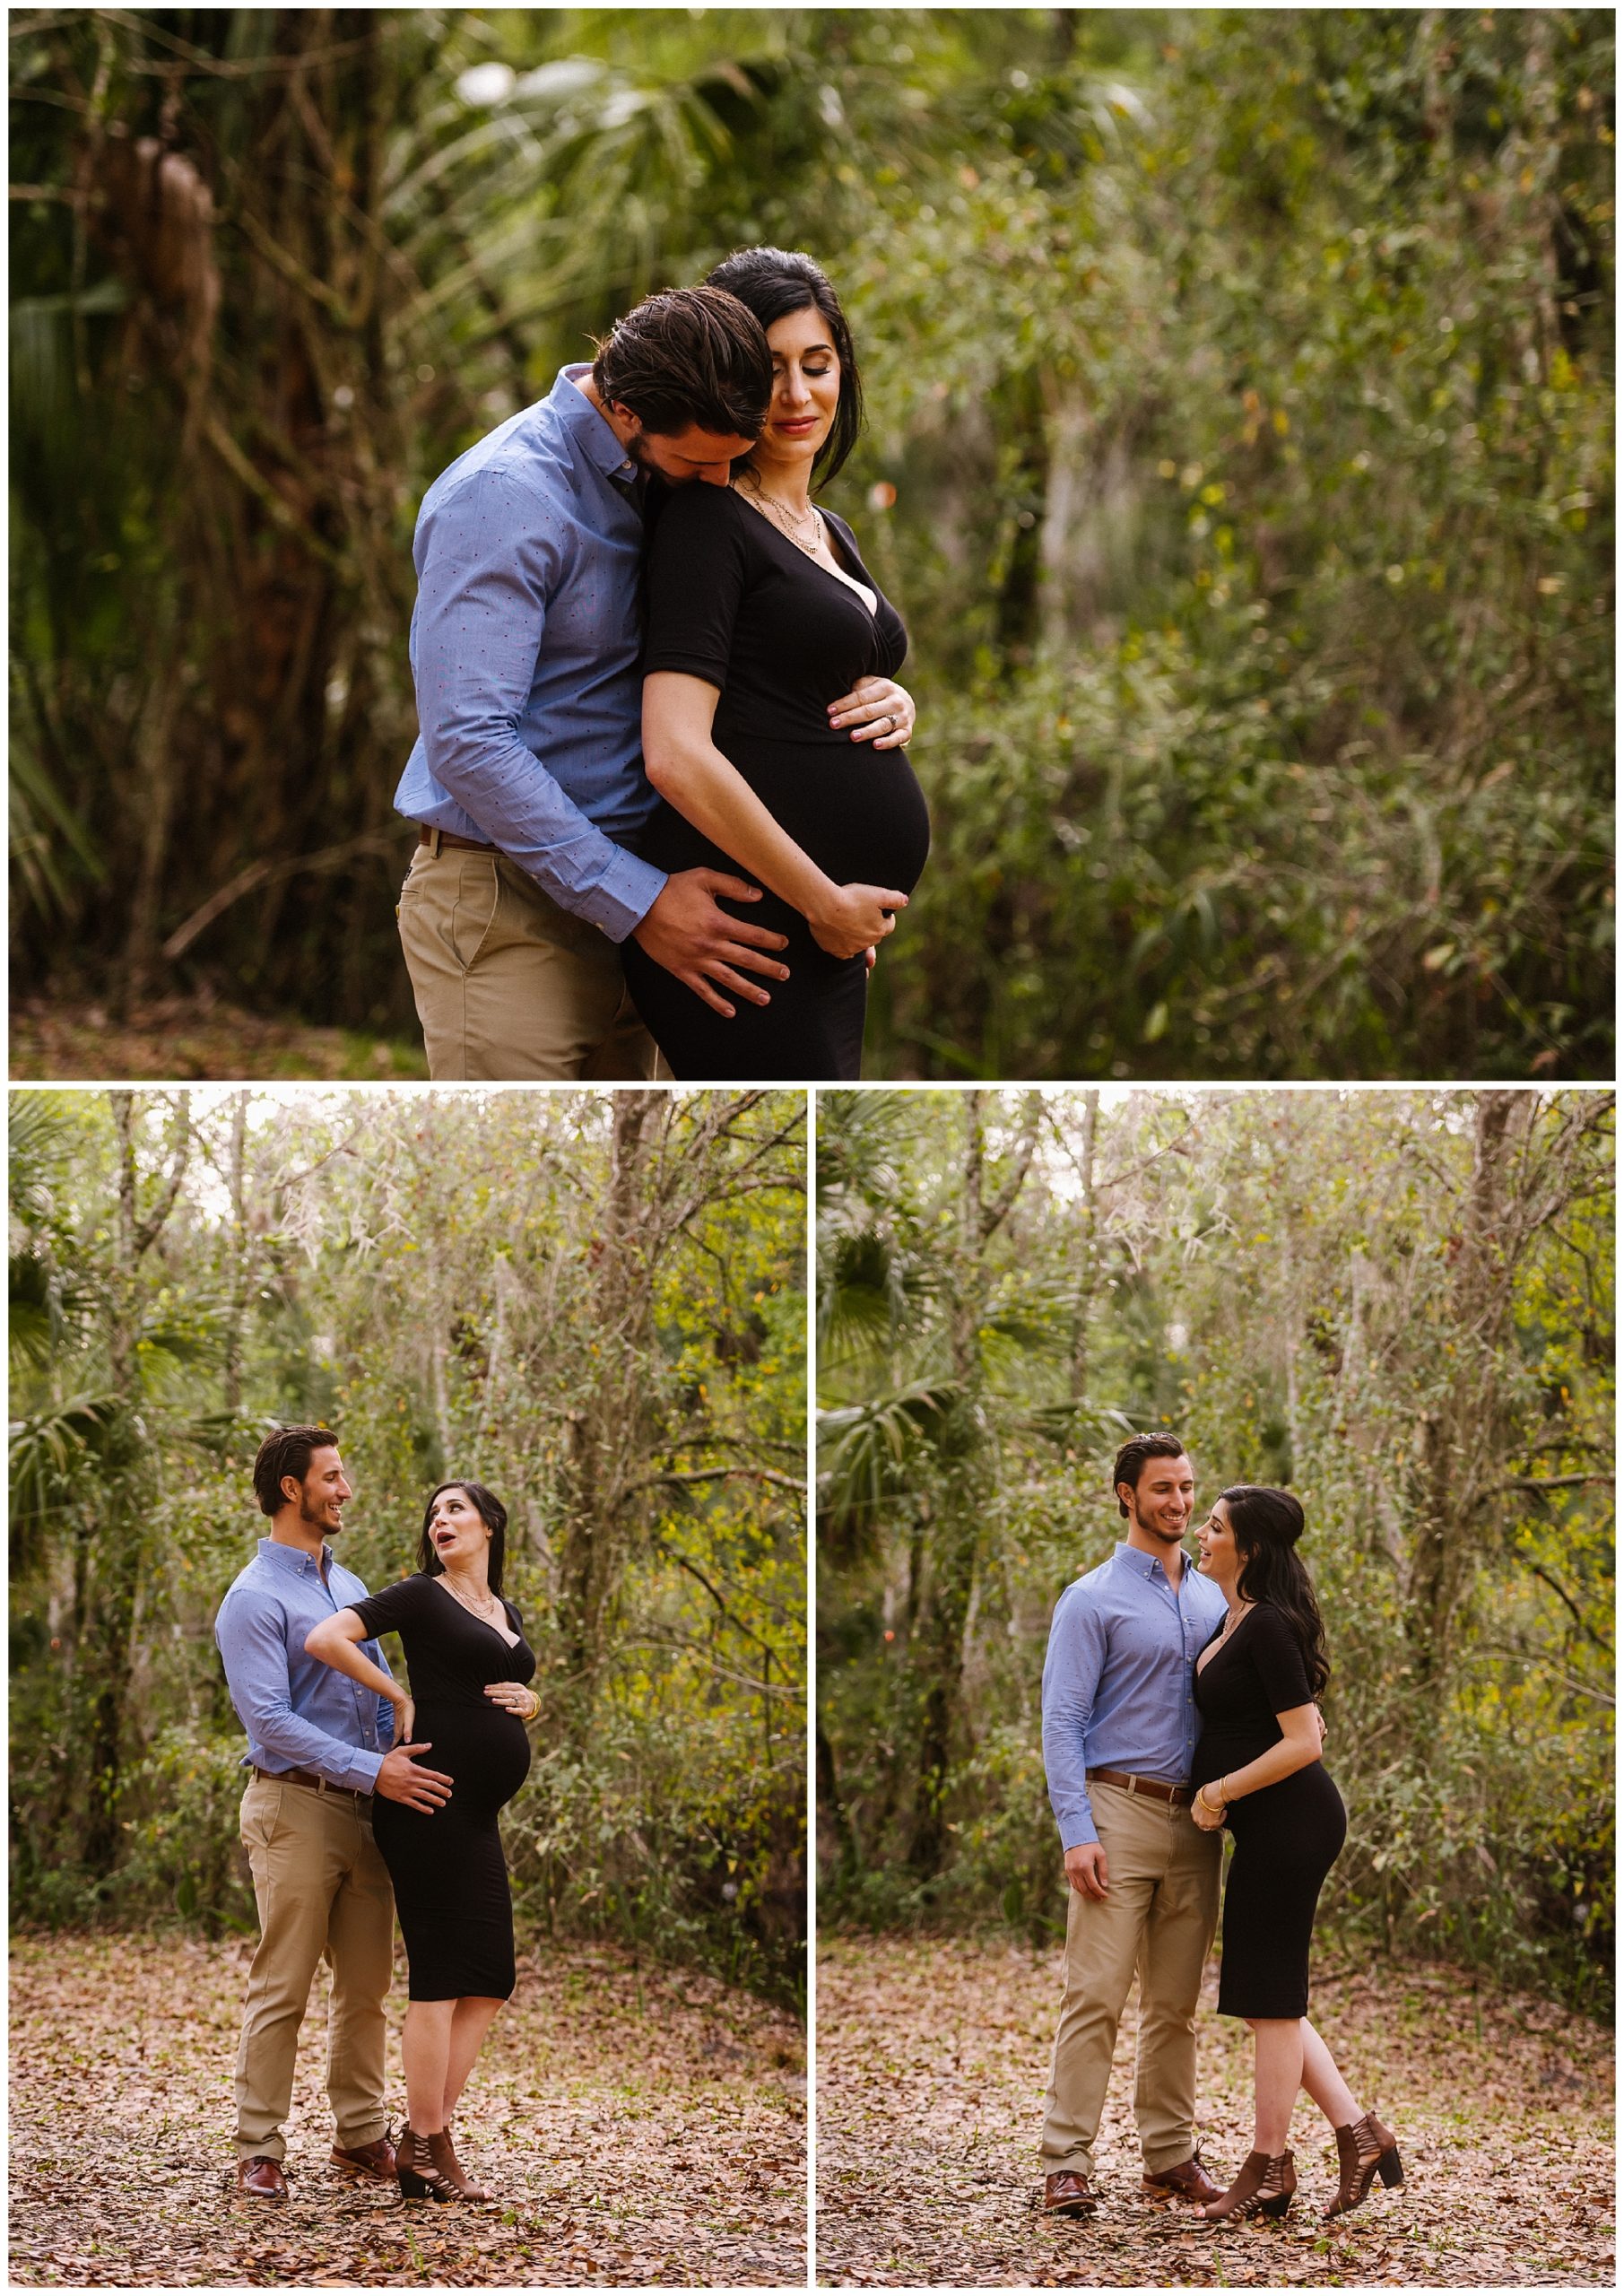 Tampa-maternity-photographer-morris-bridge-park-hip-tight-black-dress-woods_0004.jpg